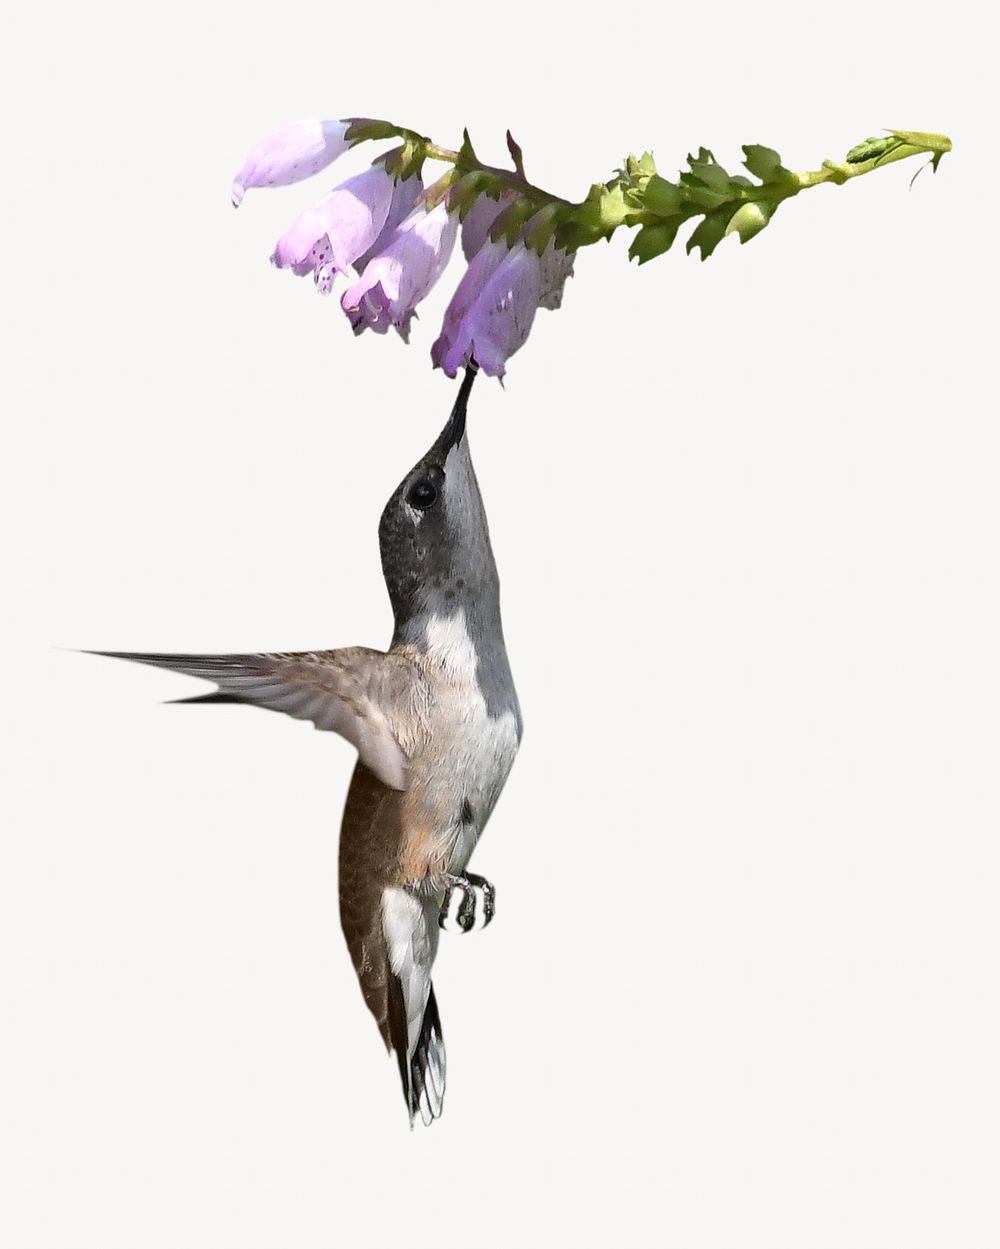 Hummingbird & flower collage element, animal isolated image